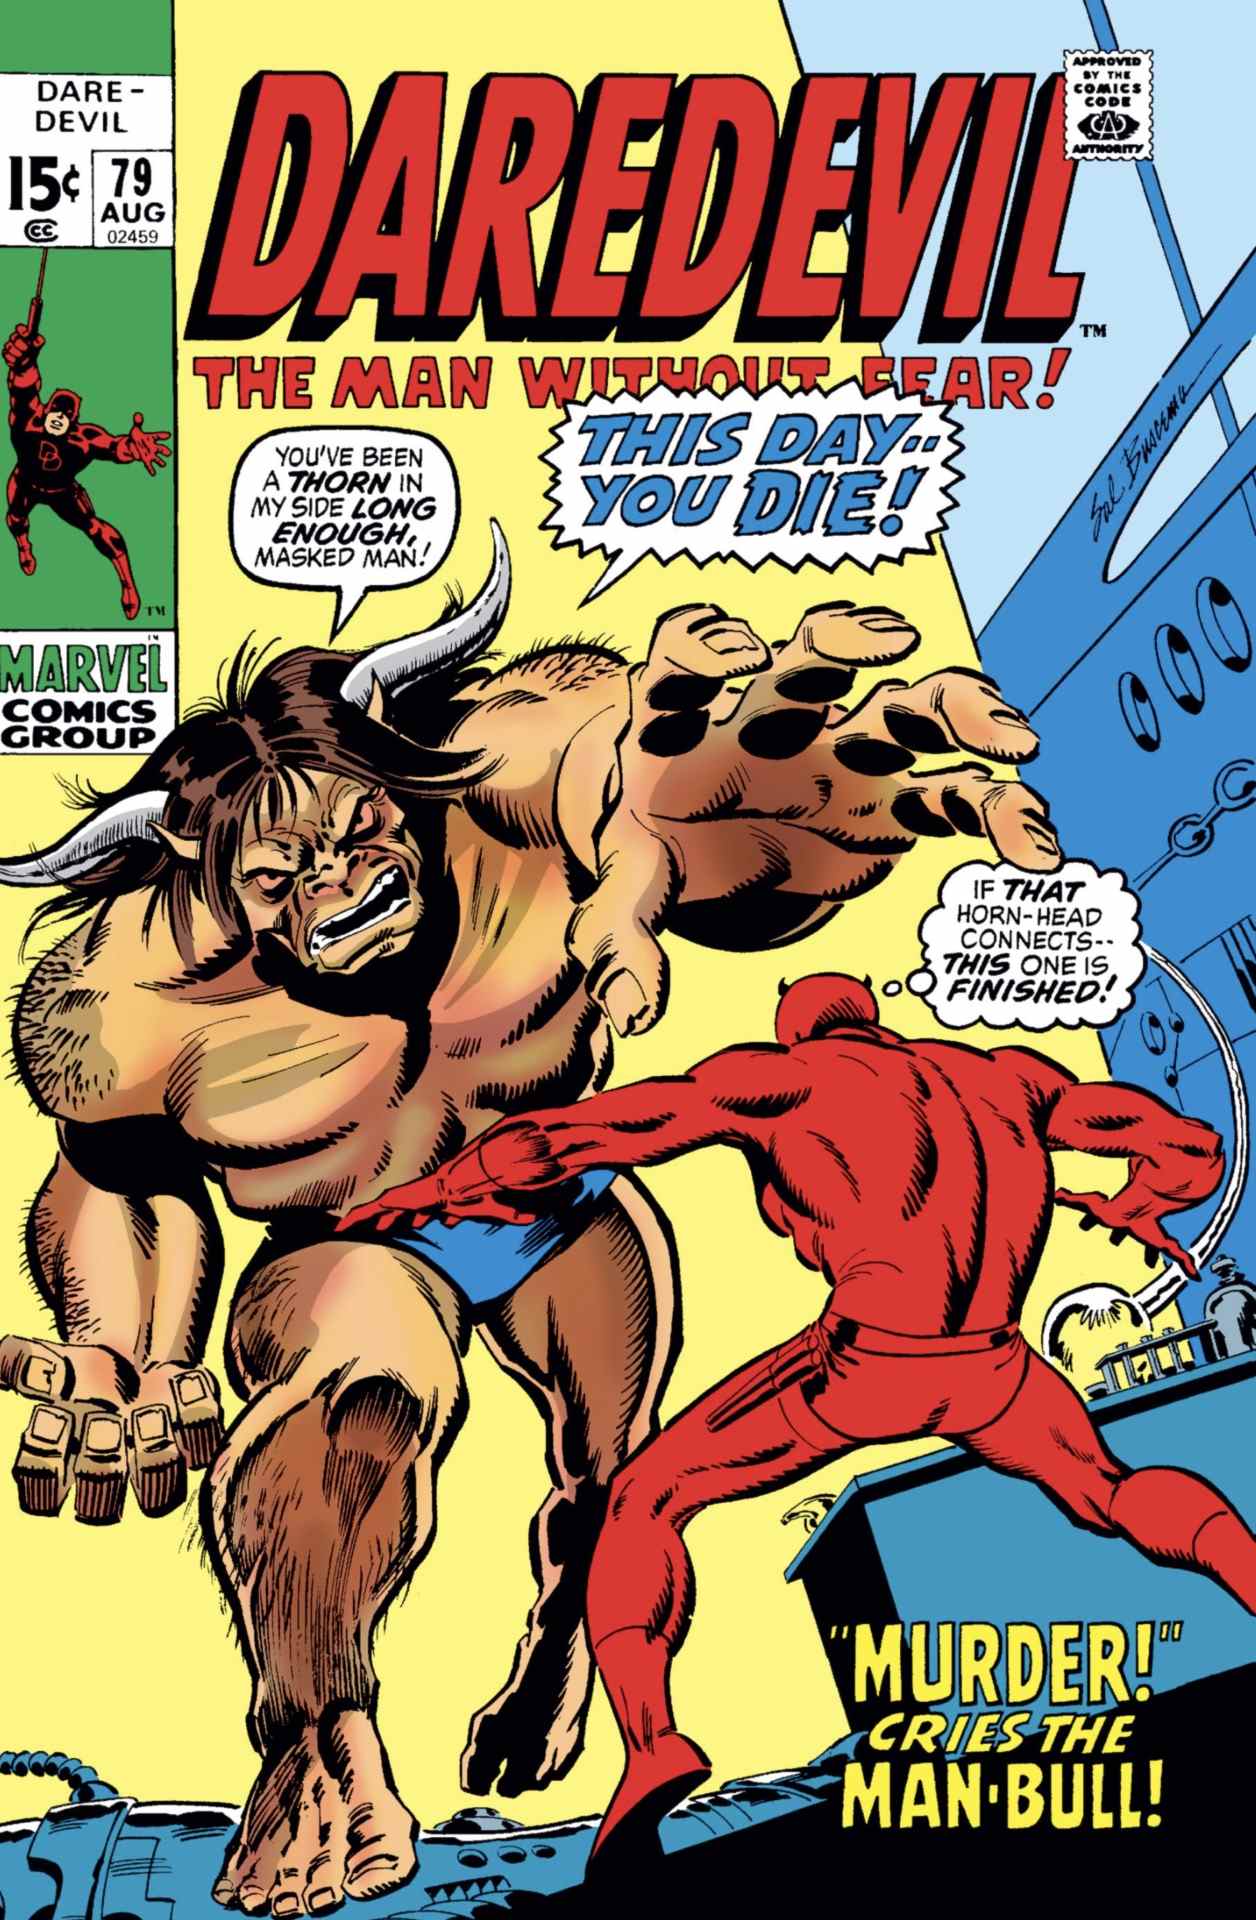 Couverture de Daredevil #79